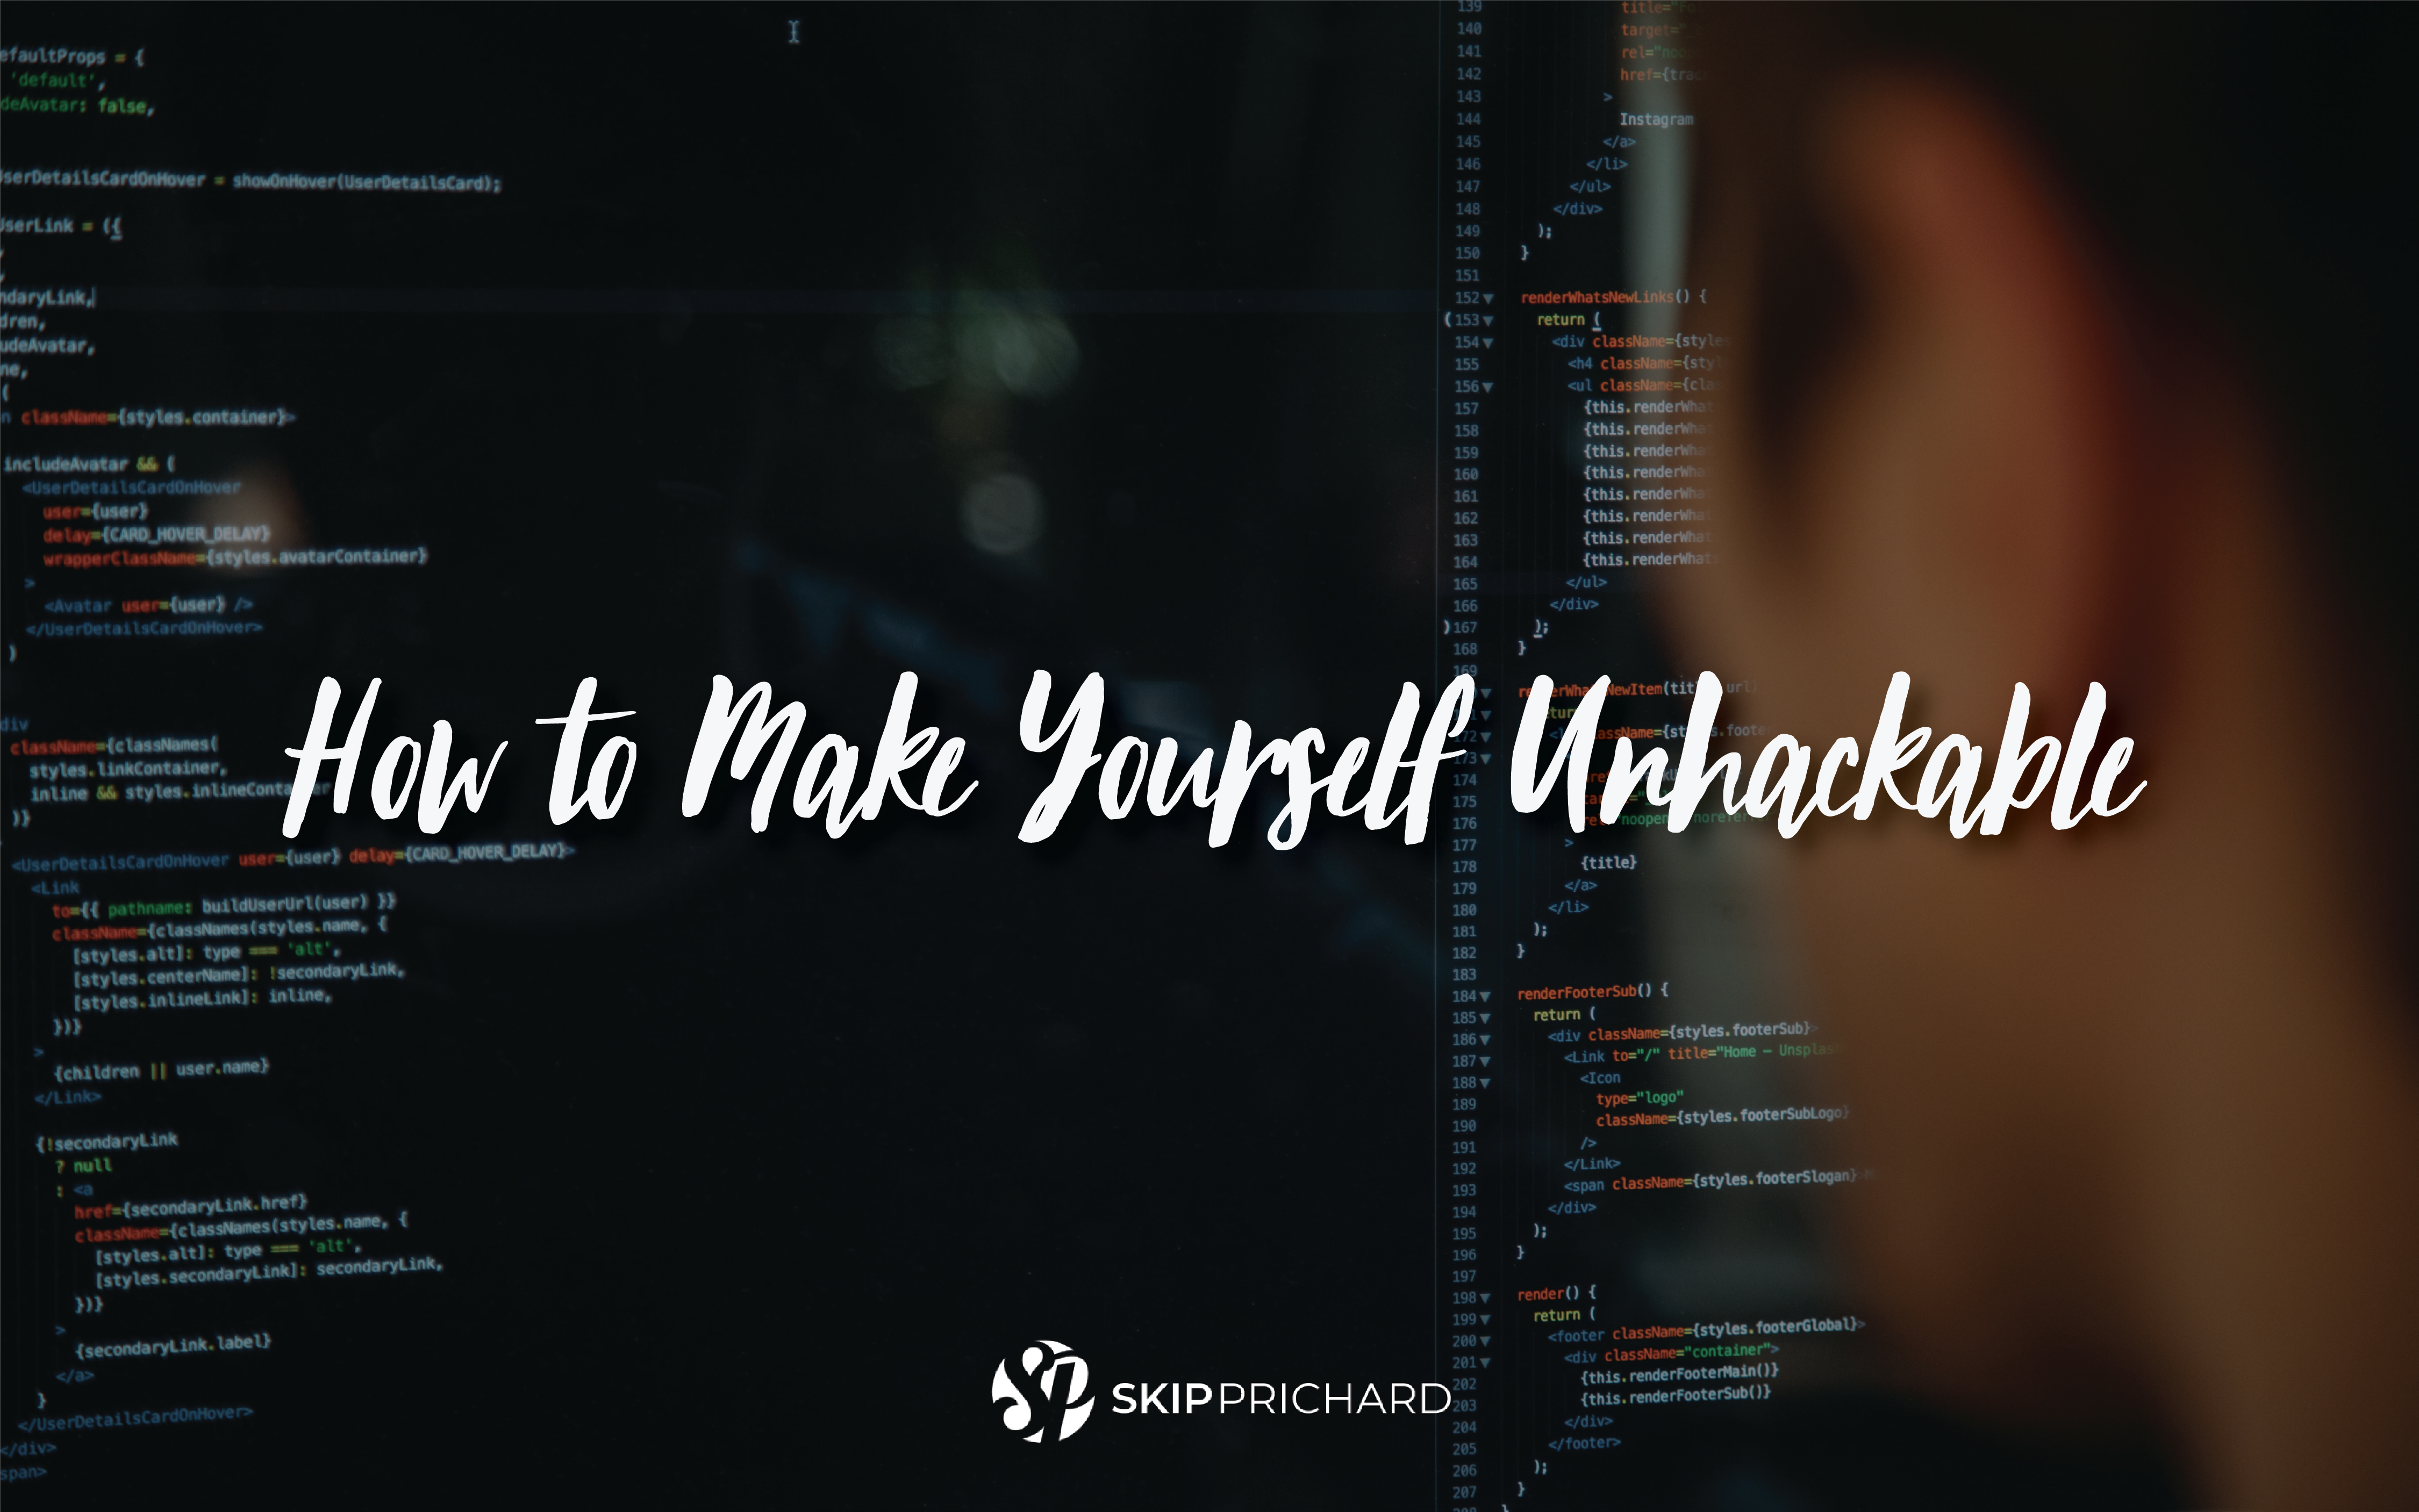 Aim Higher: How to Make Yourself Unhackable